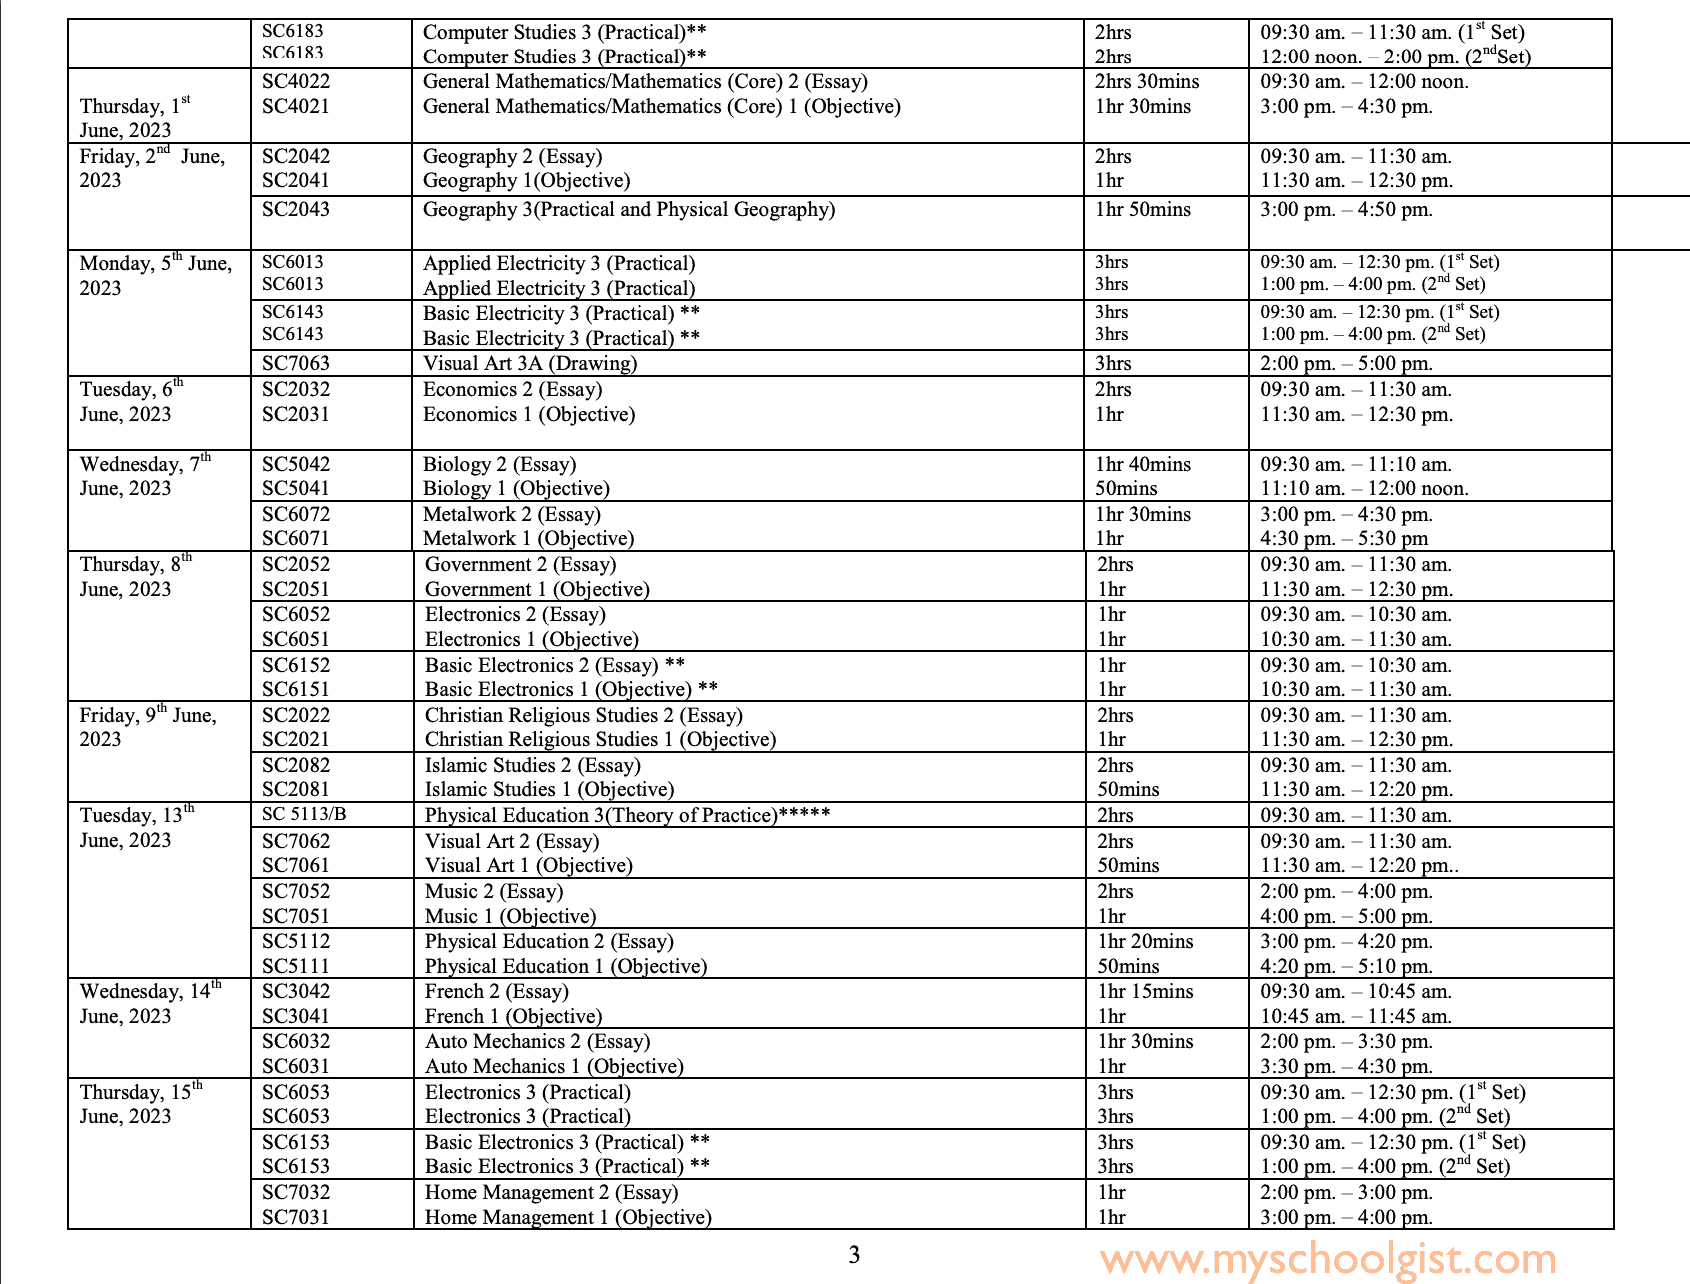 WAEC Timetable 2023 - Final